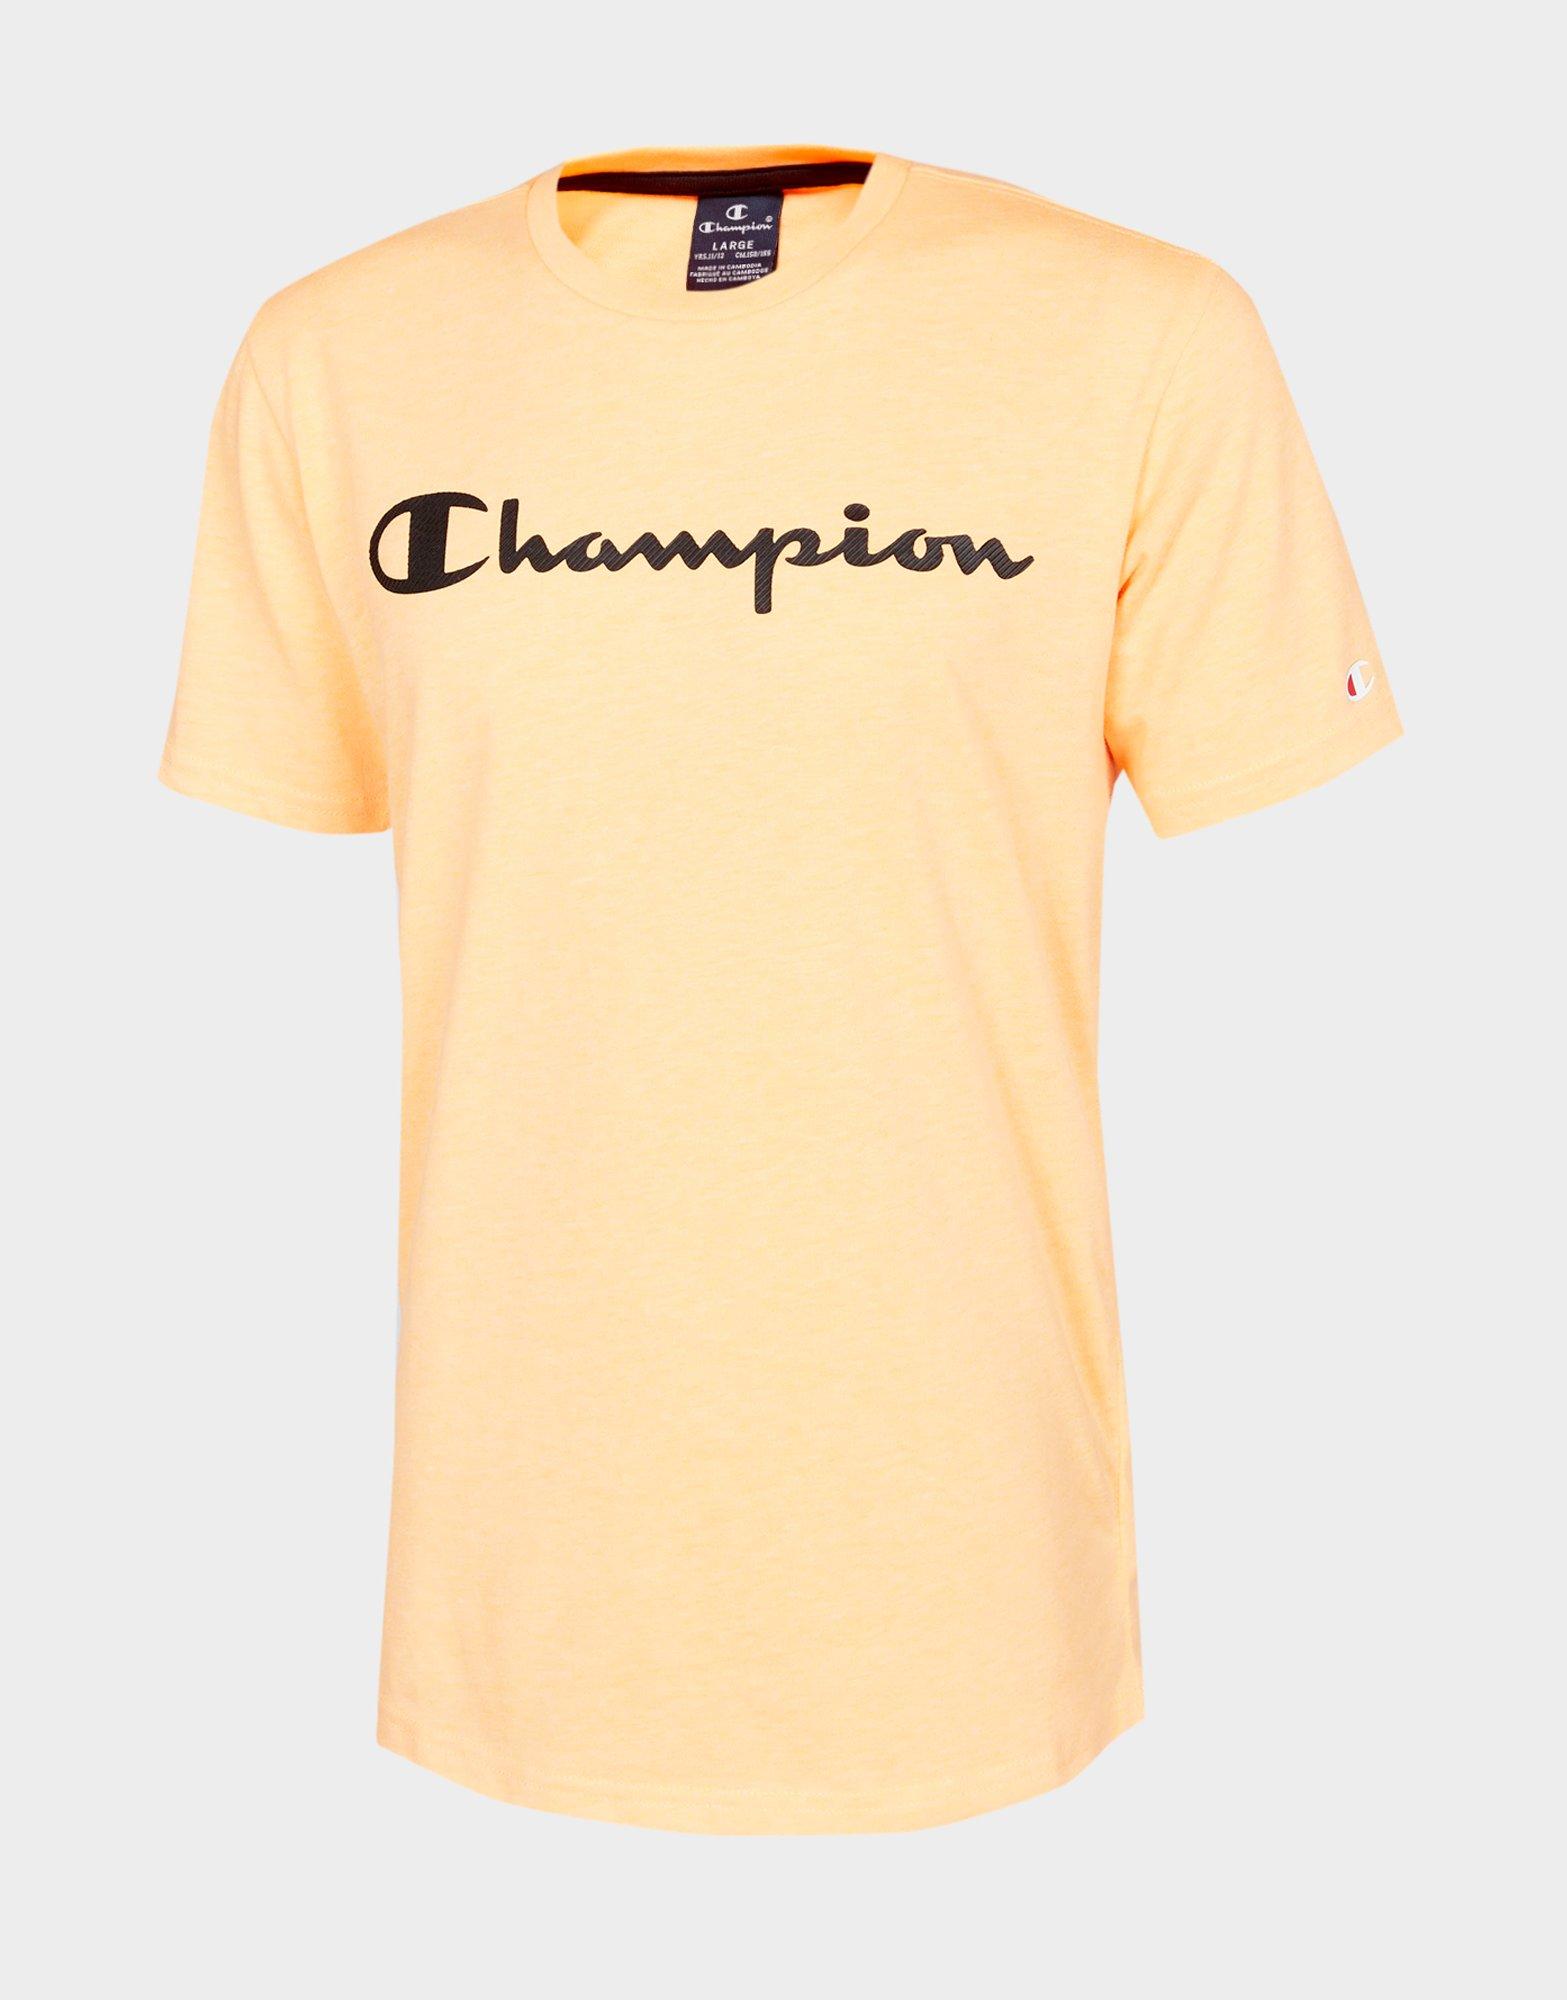 neon champion t shirt